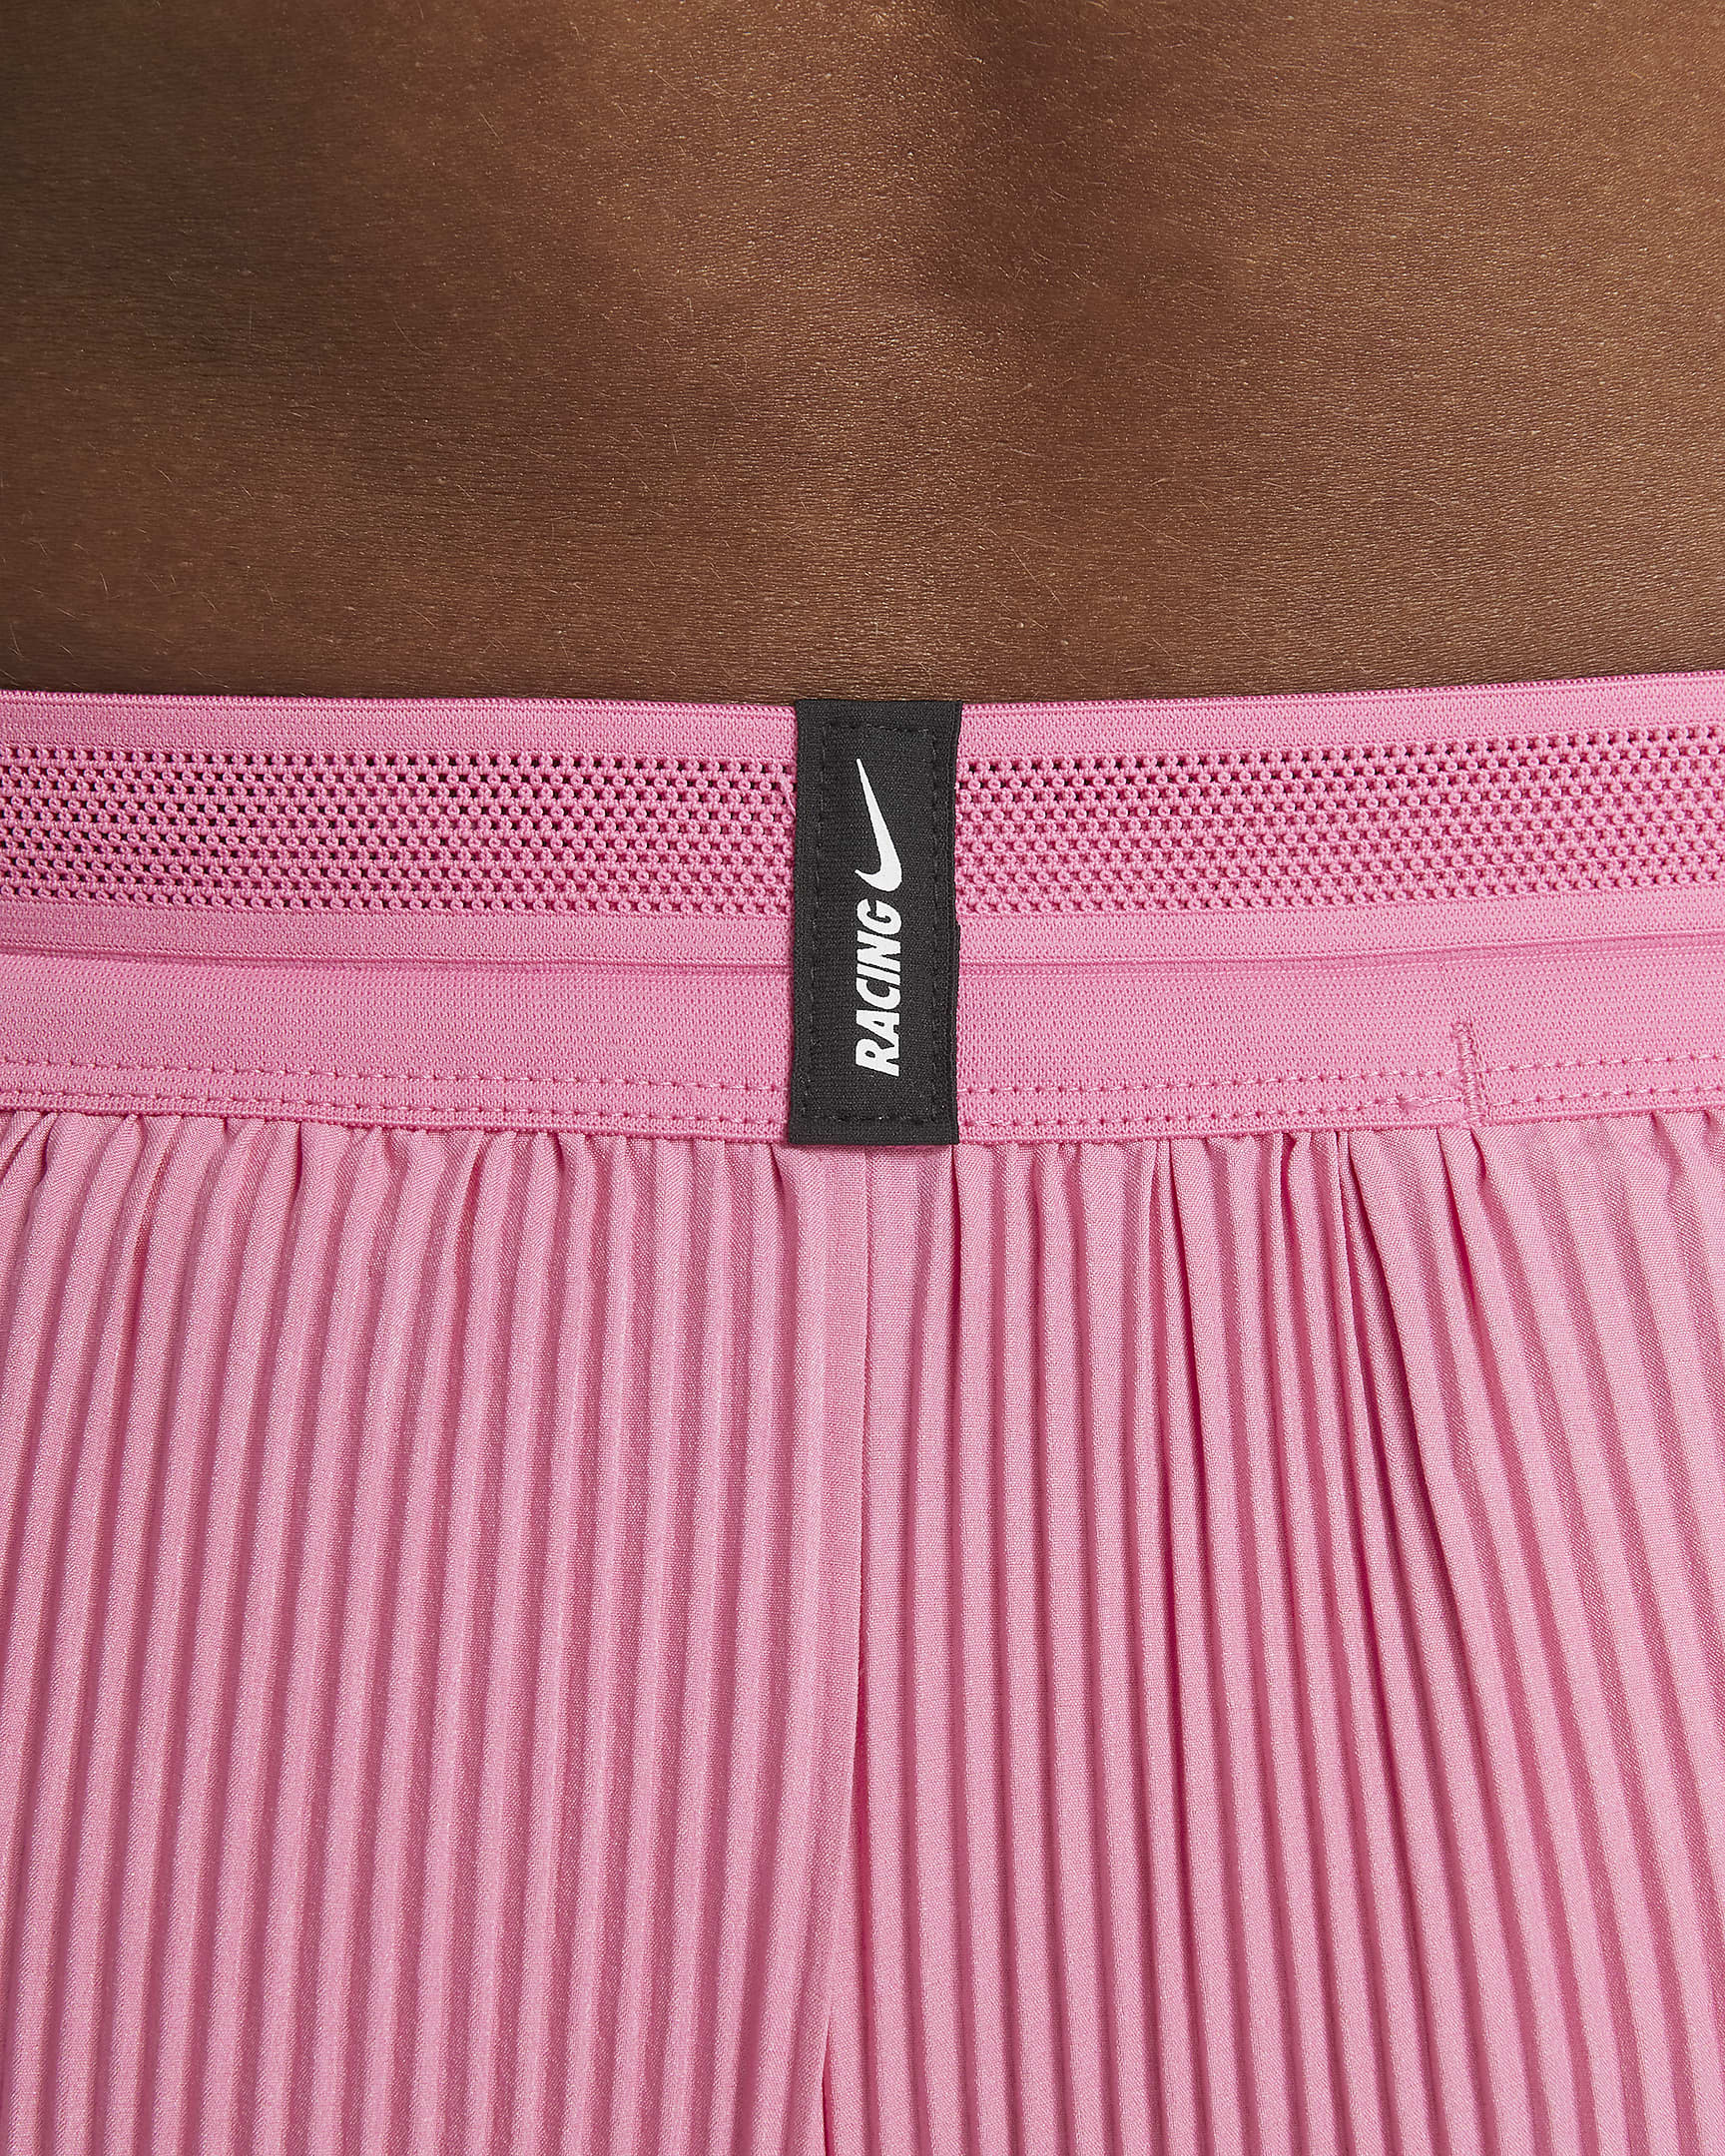 Nike AeroSwift Women's Running Shorts - Pinksicle/Black